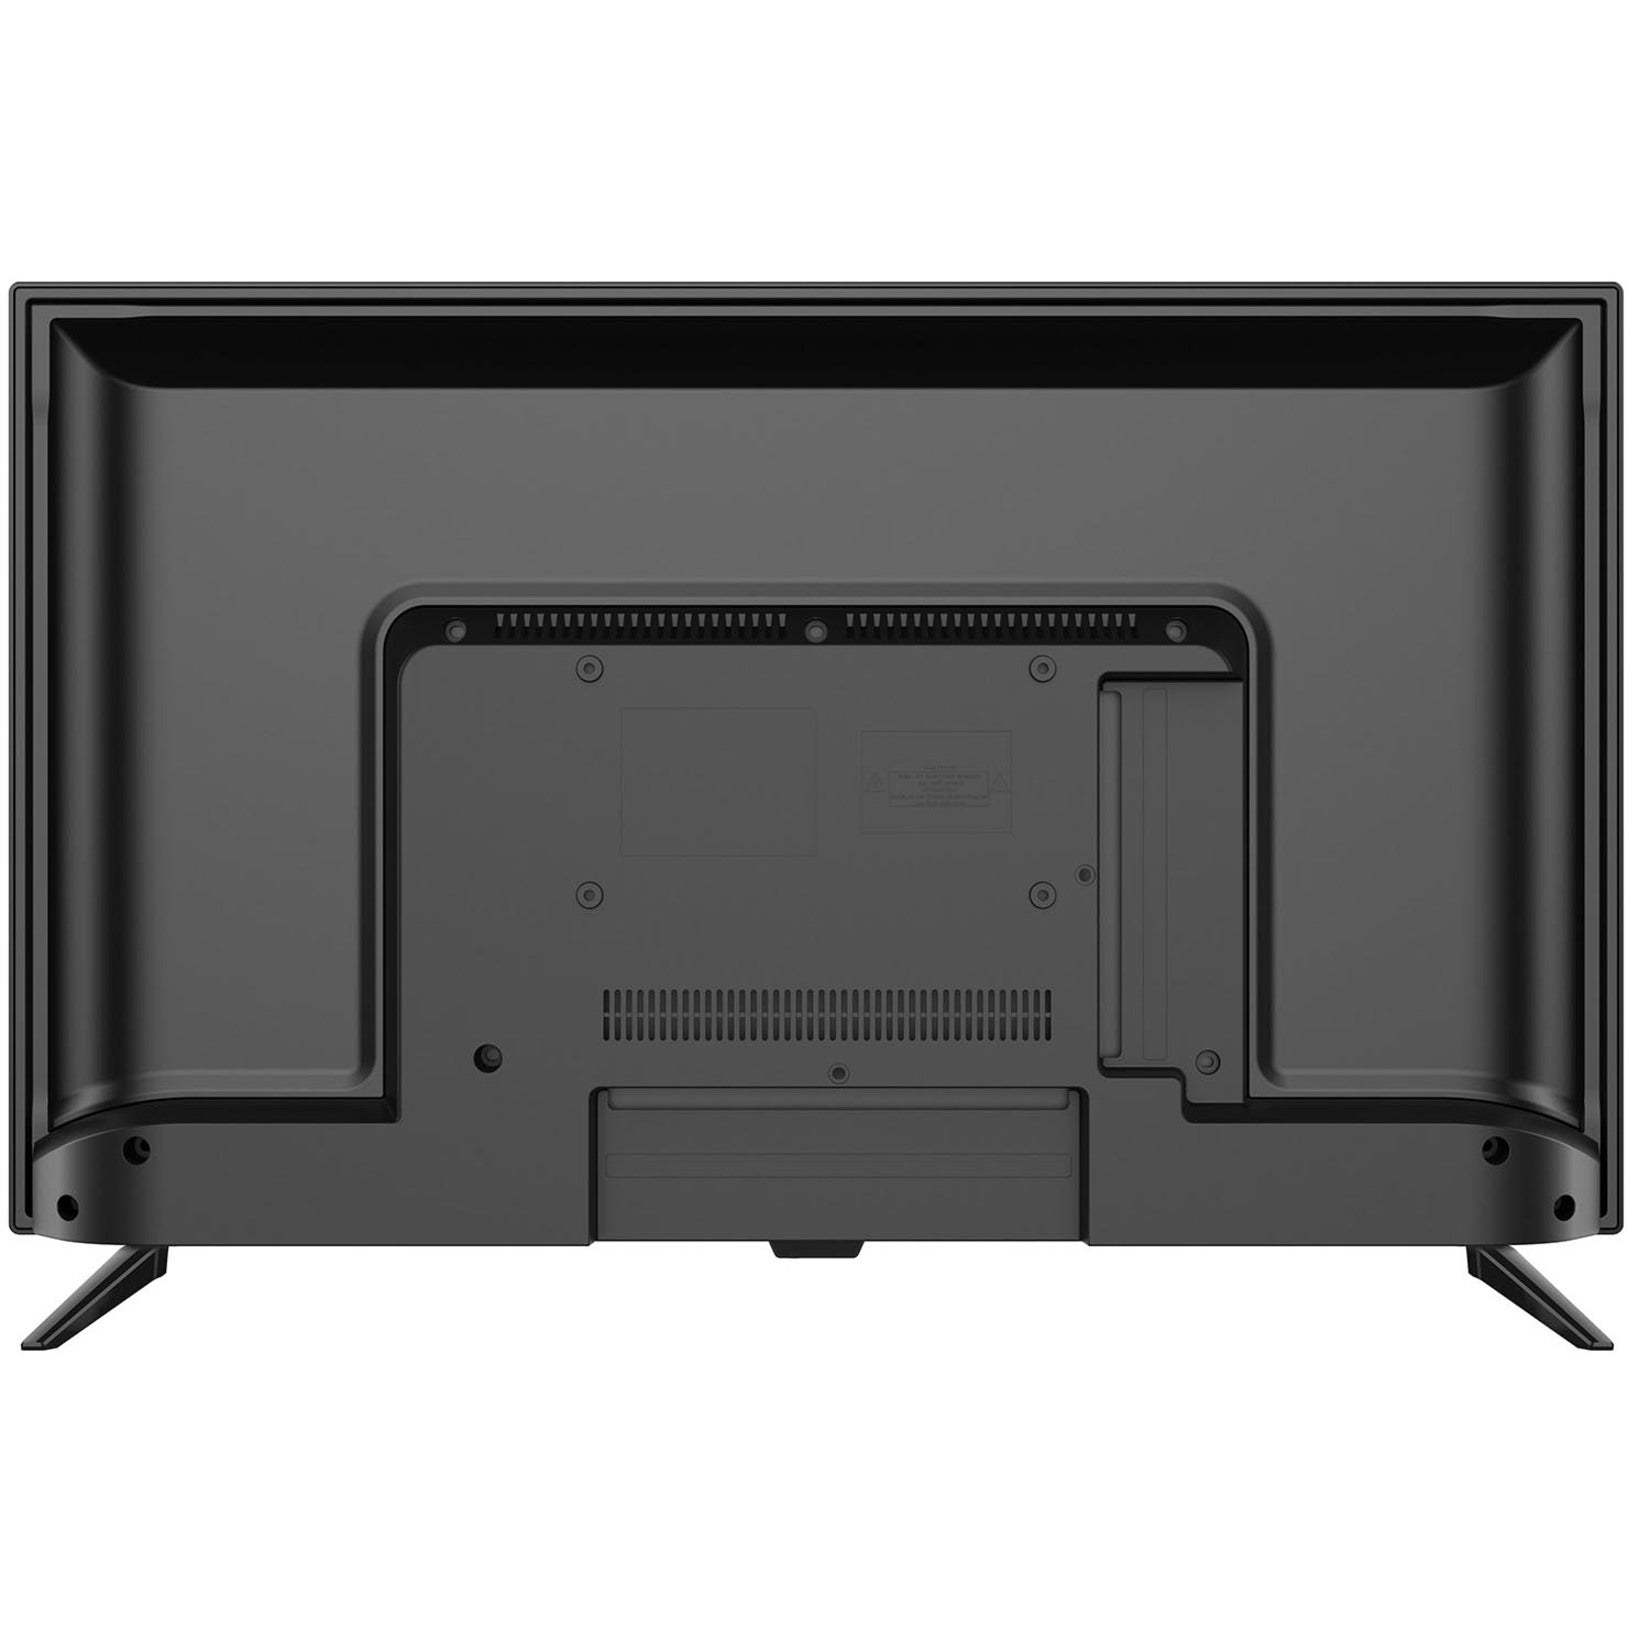 JVC LT-32MAR205 Smart LED-LCD TV, 32" HDTV, 1366 x 768, 60Hz, 16W RMS Output Power